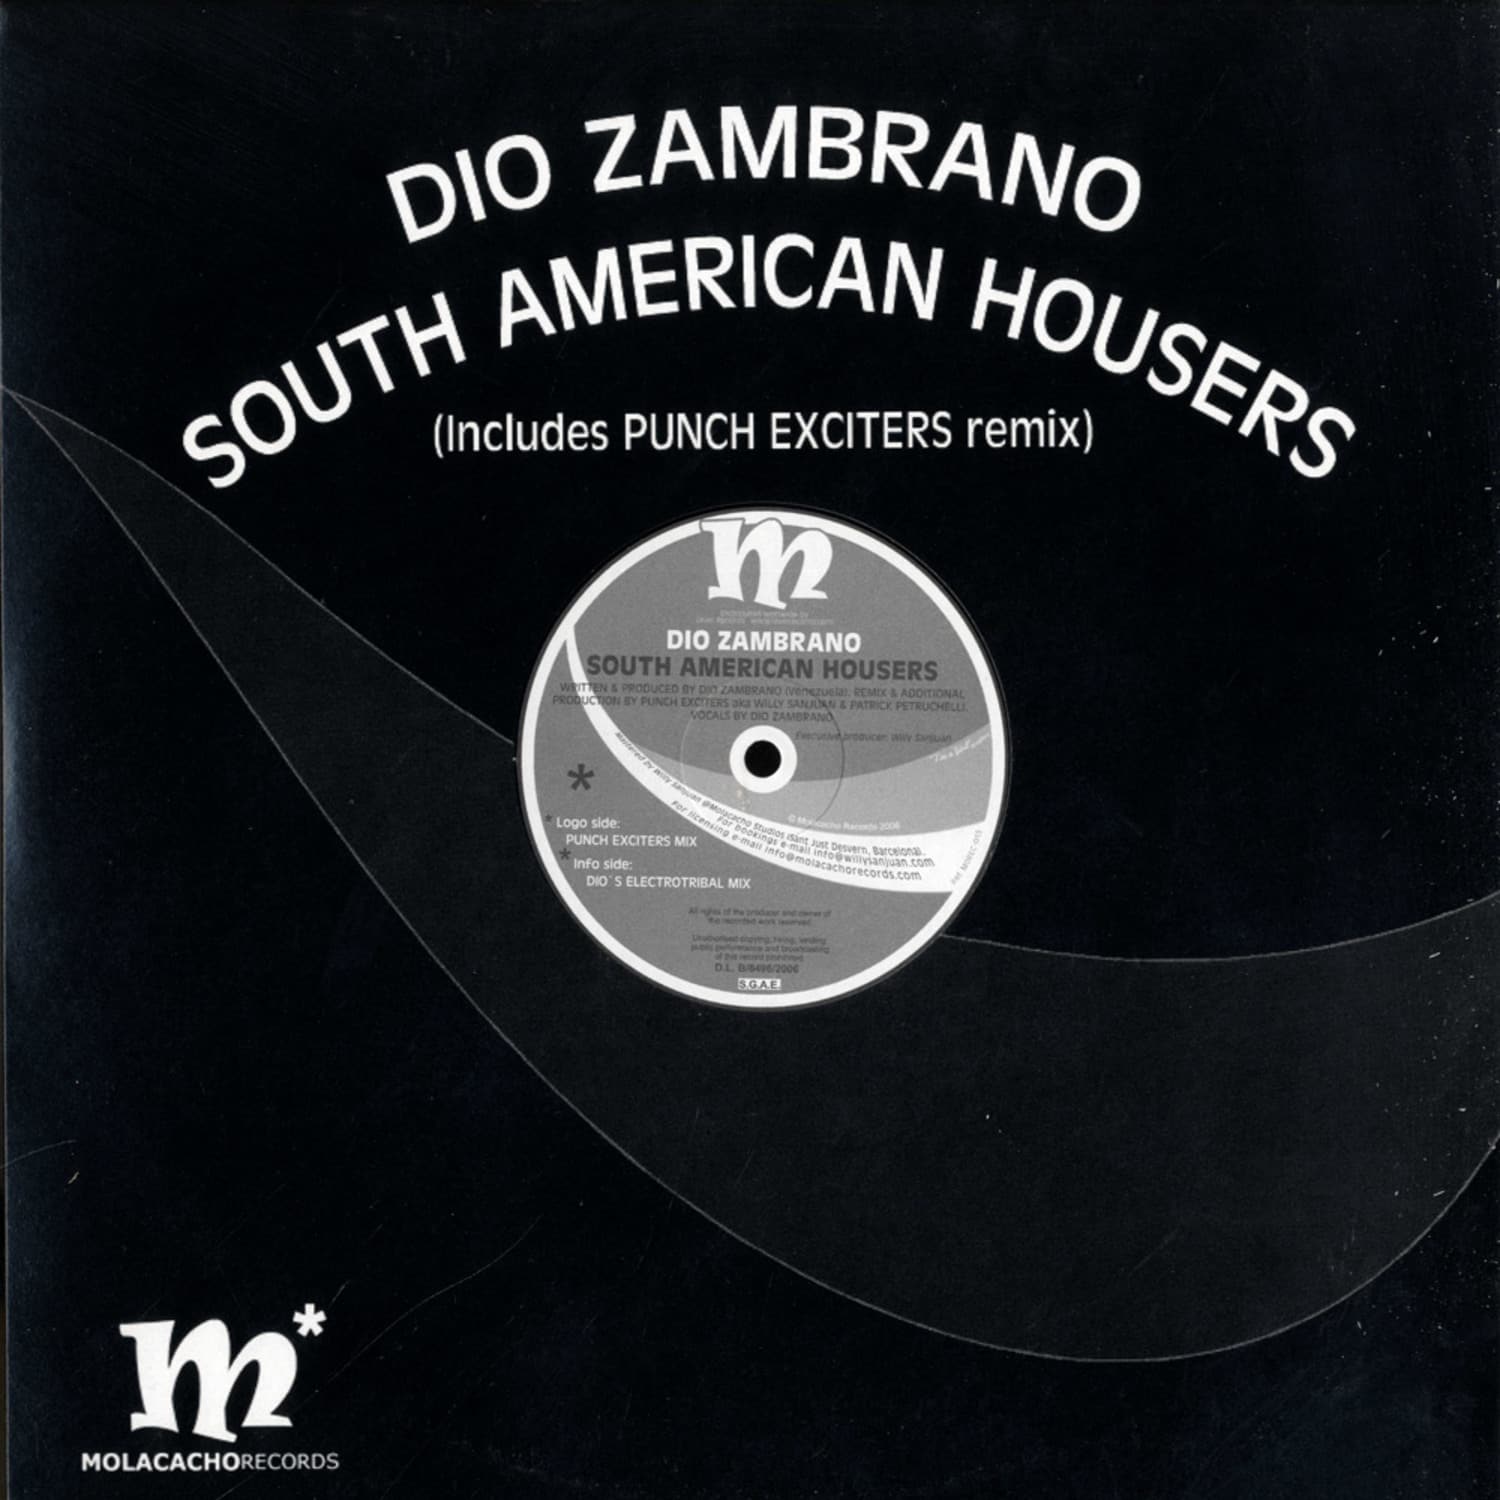 Dio Zambrano - SOUTH AMERICAN HOUSERS